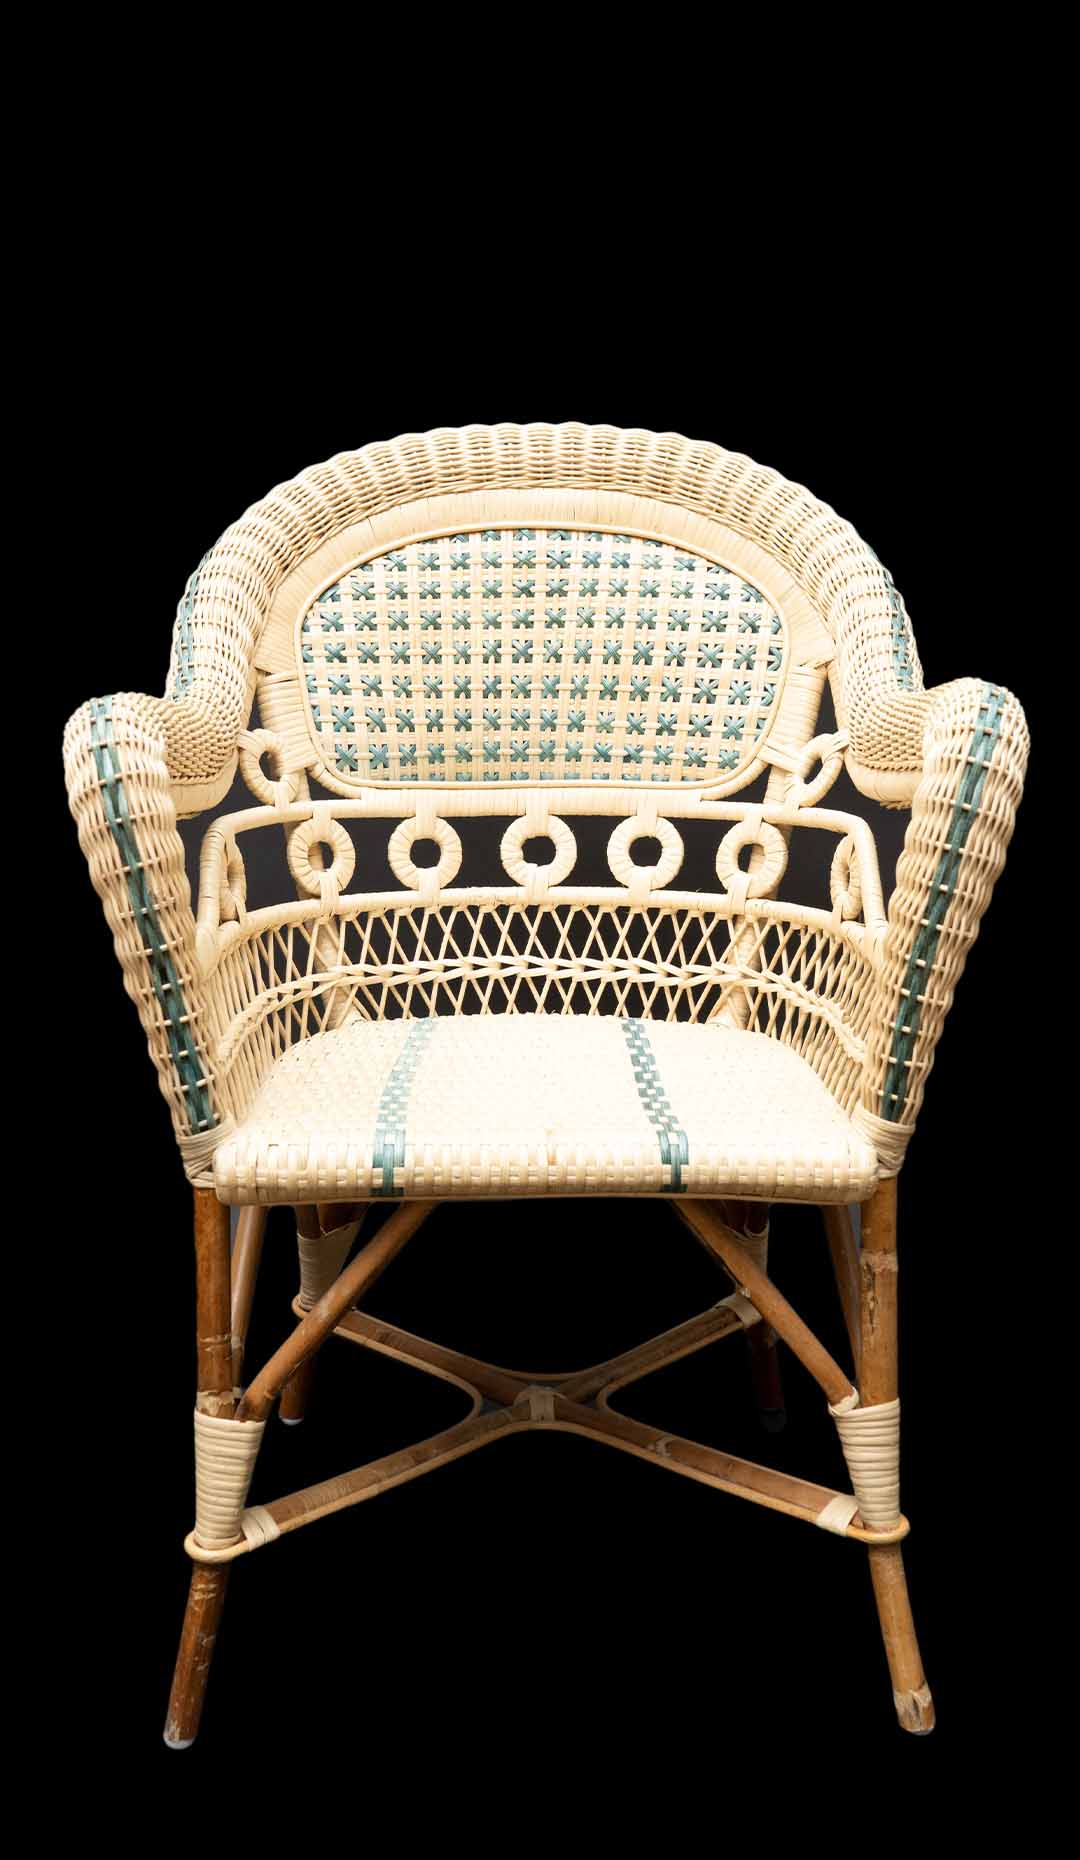 Vintage Style Rattan Chair